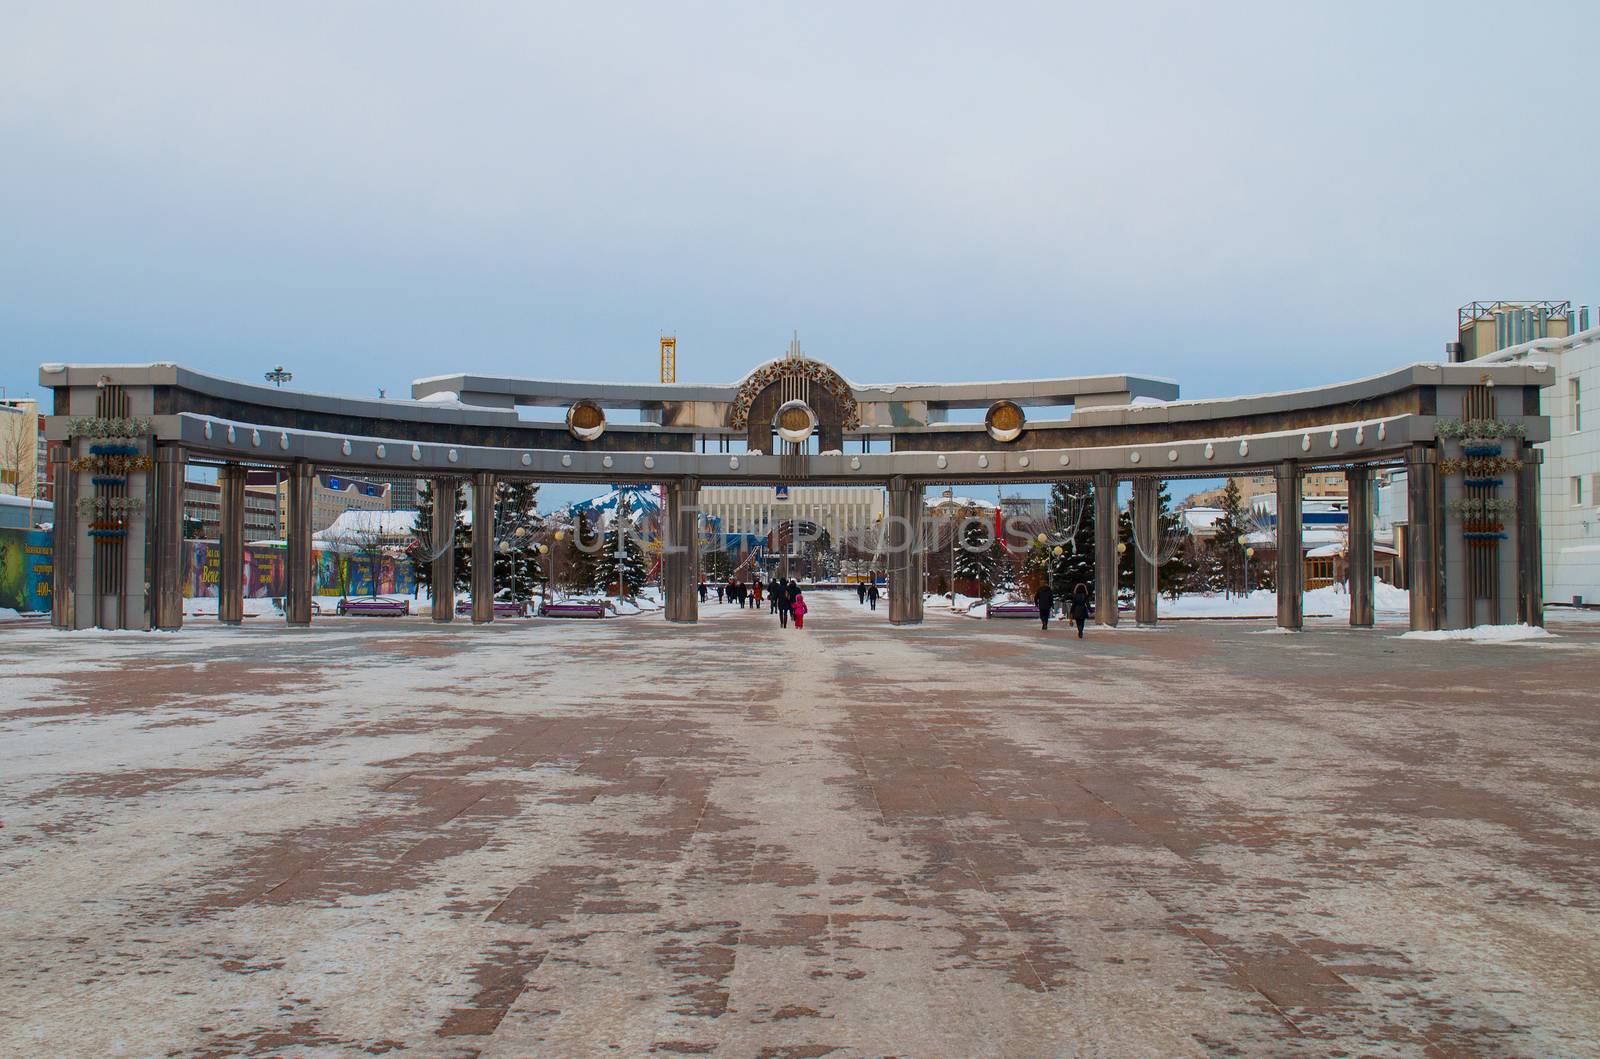 Arch in Tsvetnoy Boulevard. City of Tyumen. January, 2016. by veronka72